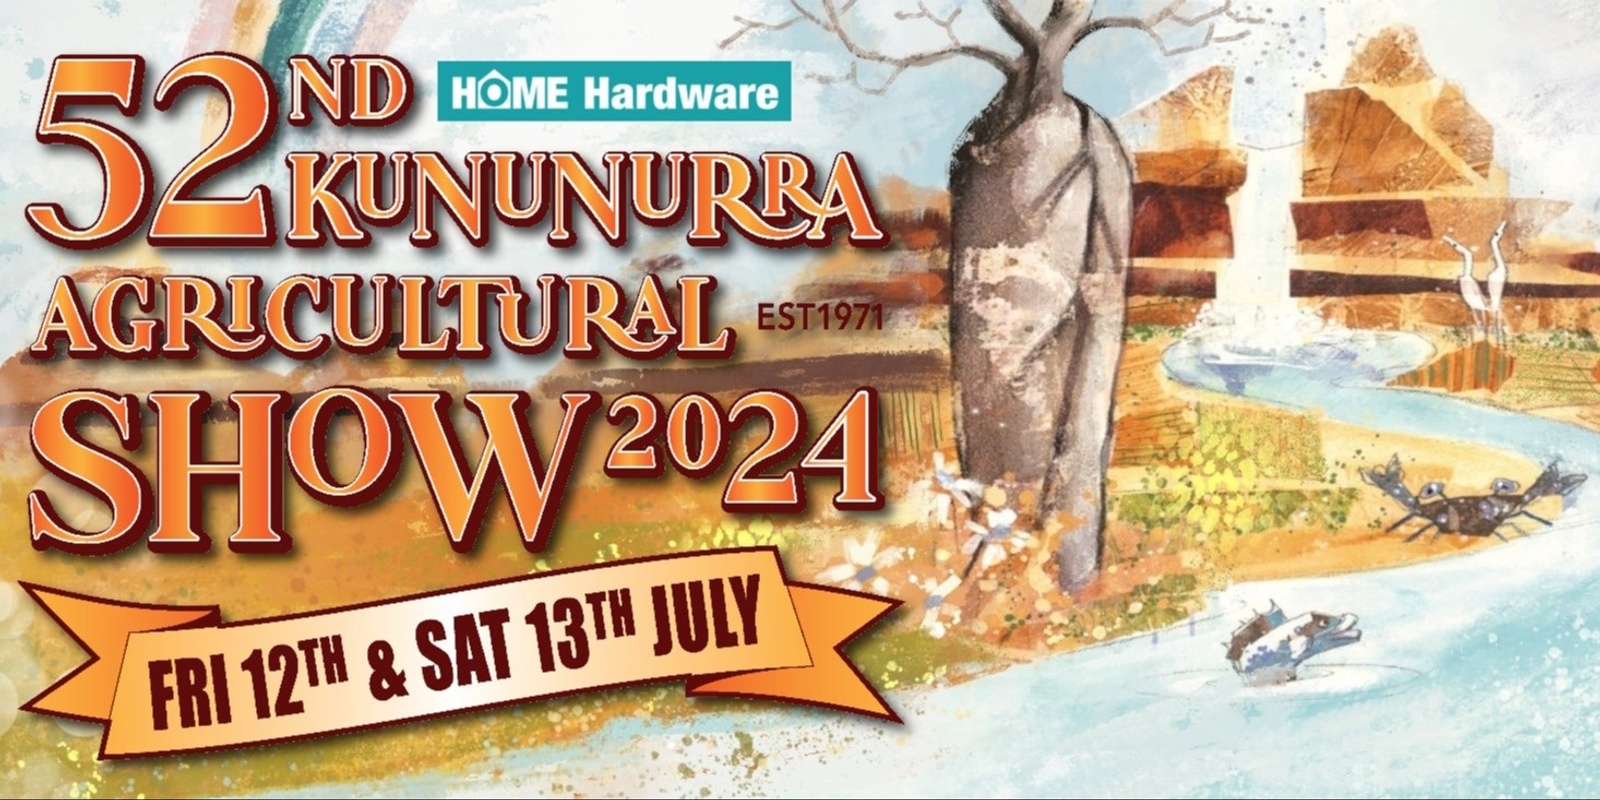 Banner image for Home Hardware 52nd Kununurra Agricultural Show